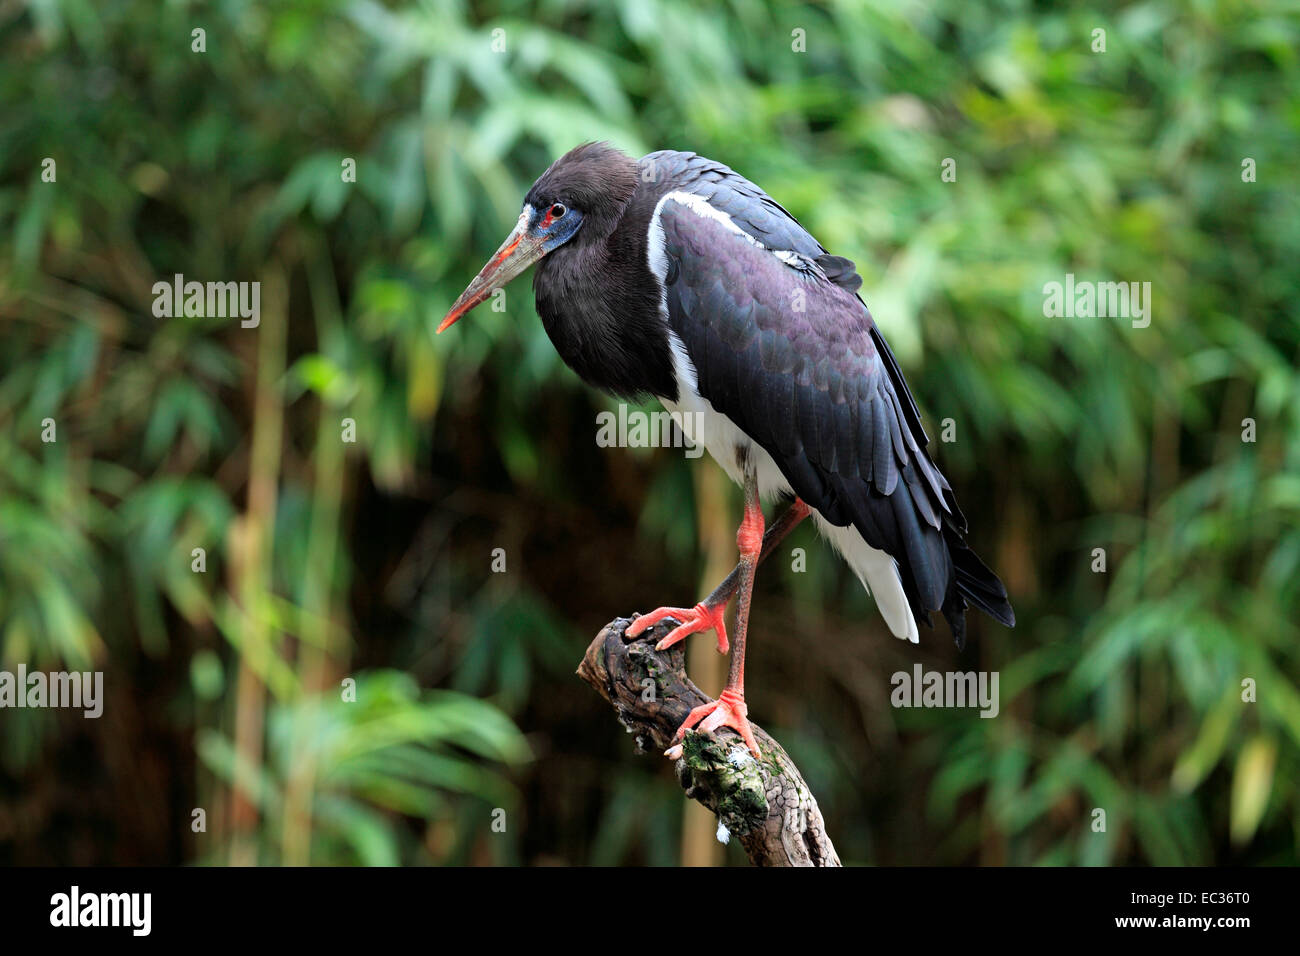 Abdimstorch, (Ciconia abdimii), Afrika, Storch, Stoerche, Warte  Abdim's Stork, (Ciconia abdimii), Africa  Abdim's Stork, (Cicon Stock Photo